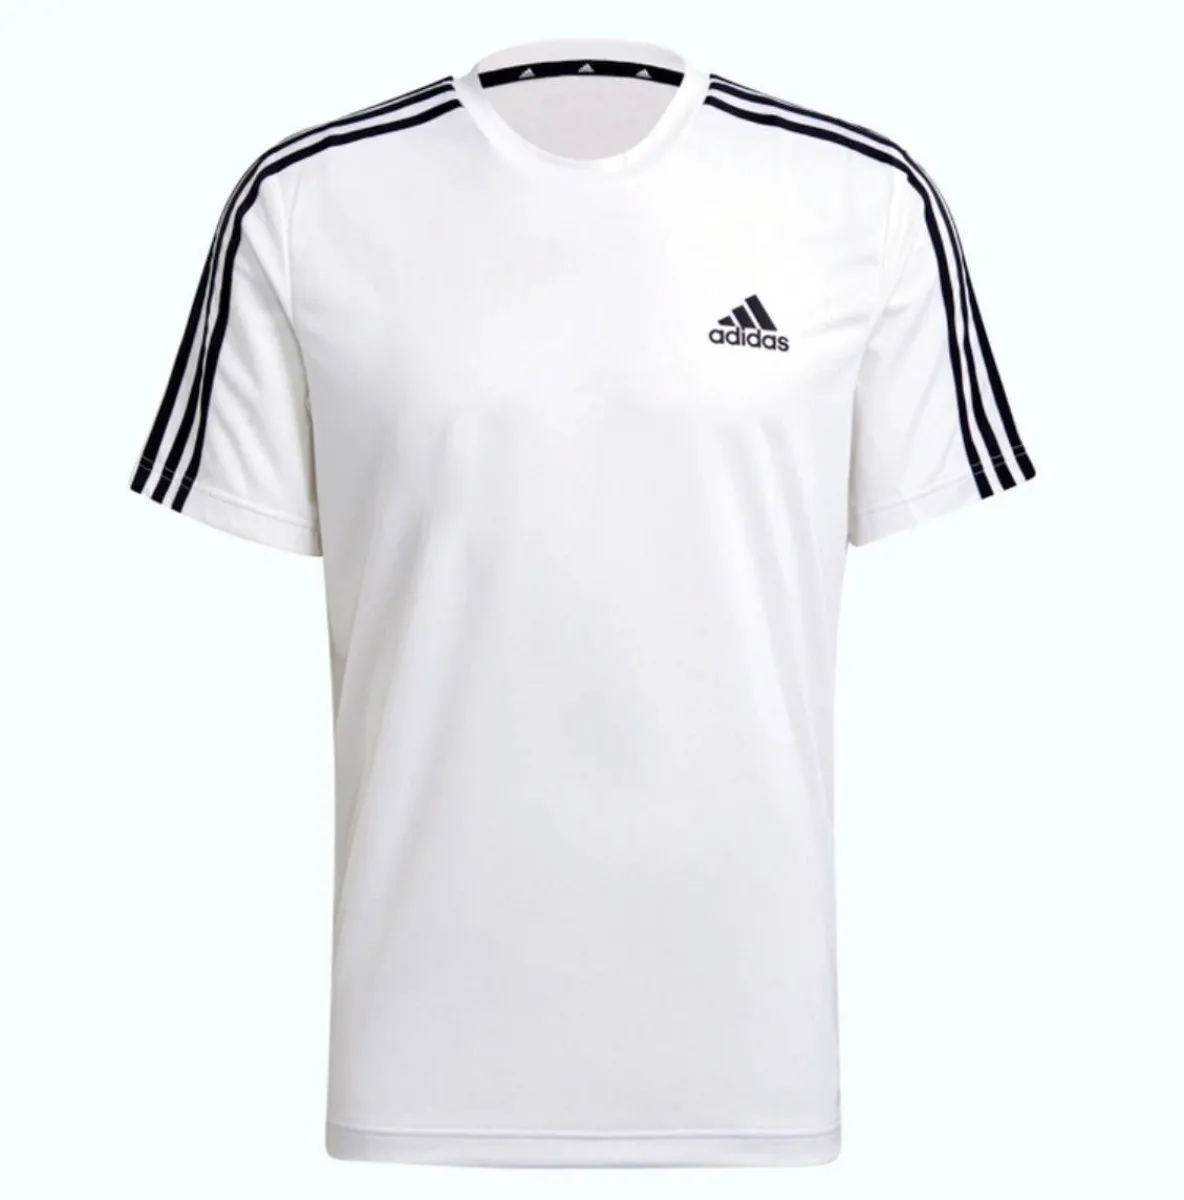 adidas T-Shirt 3S weiß